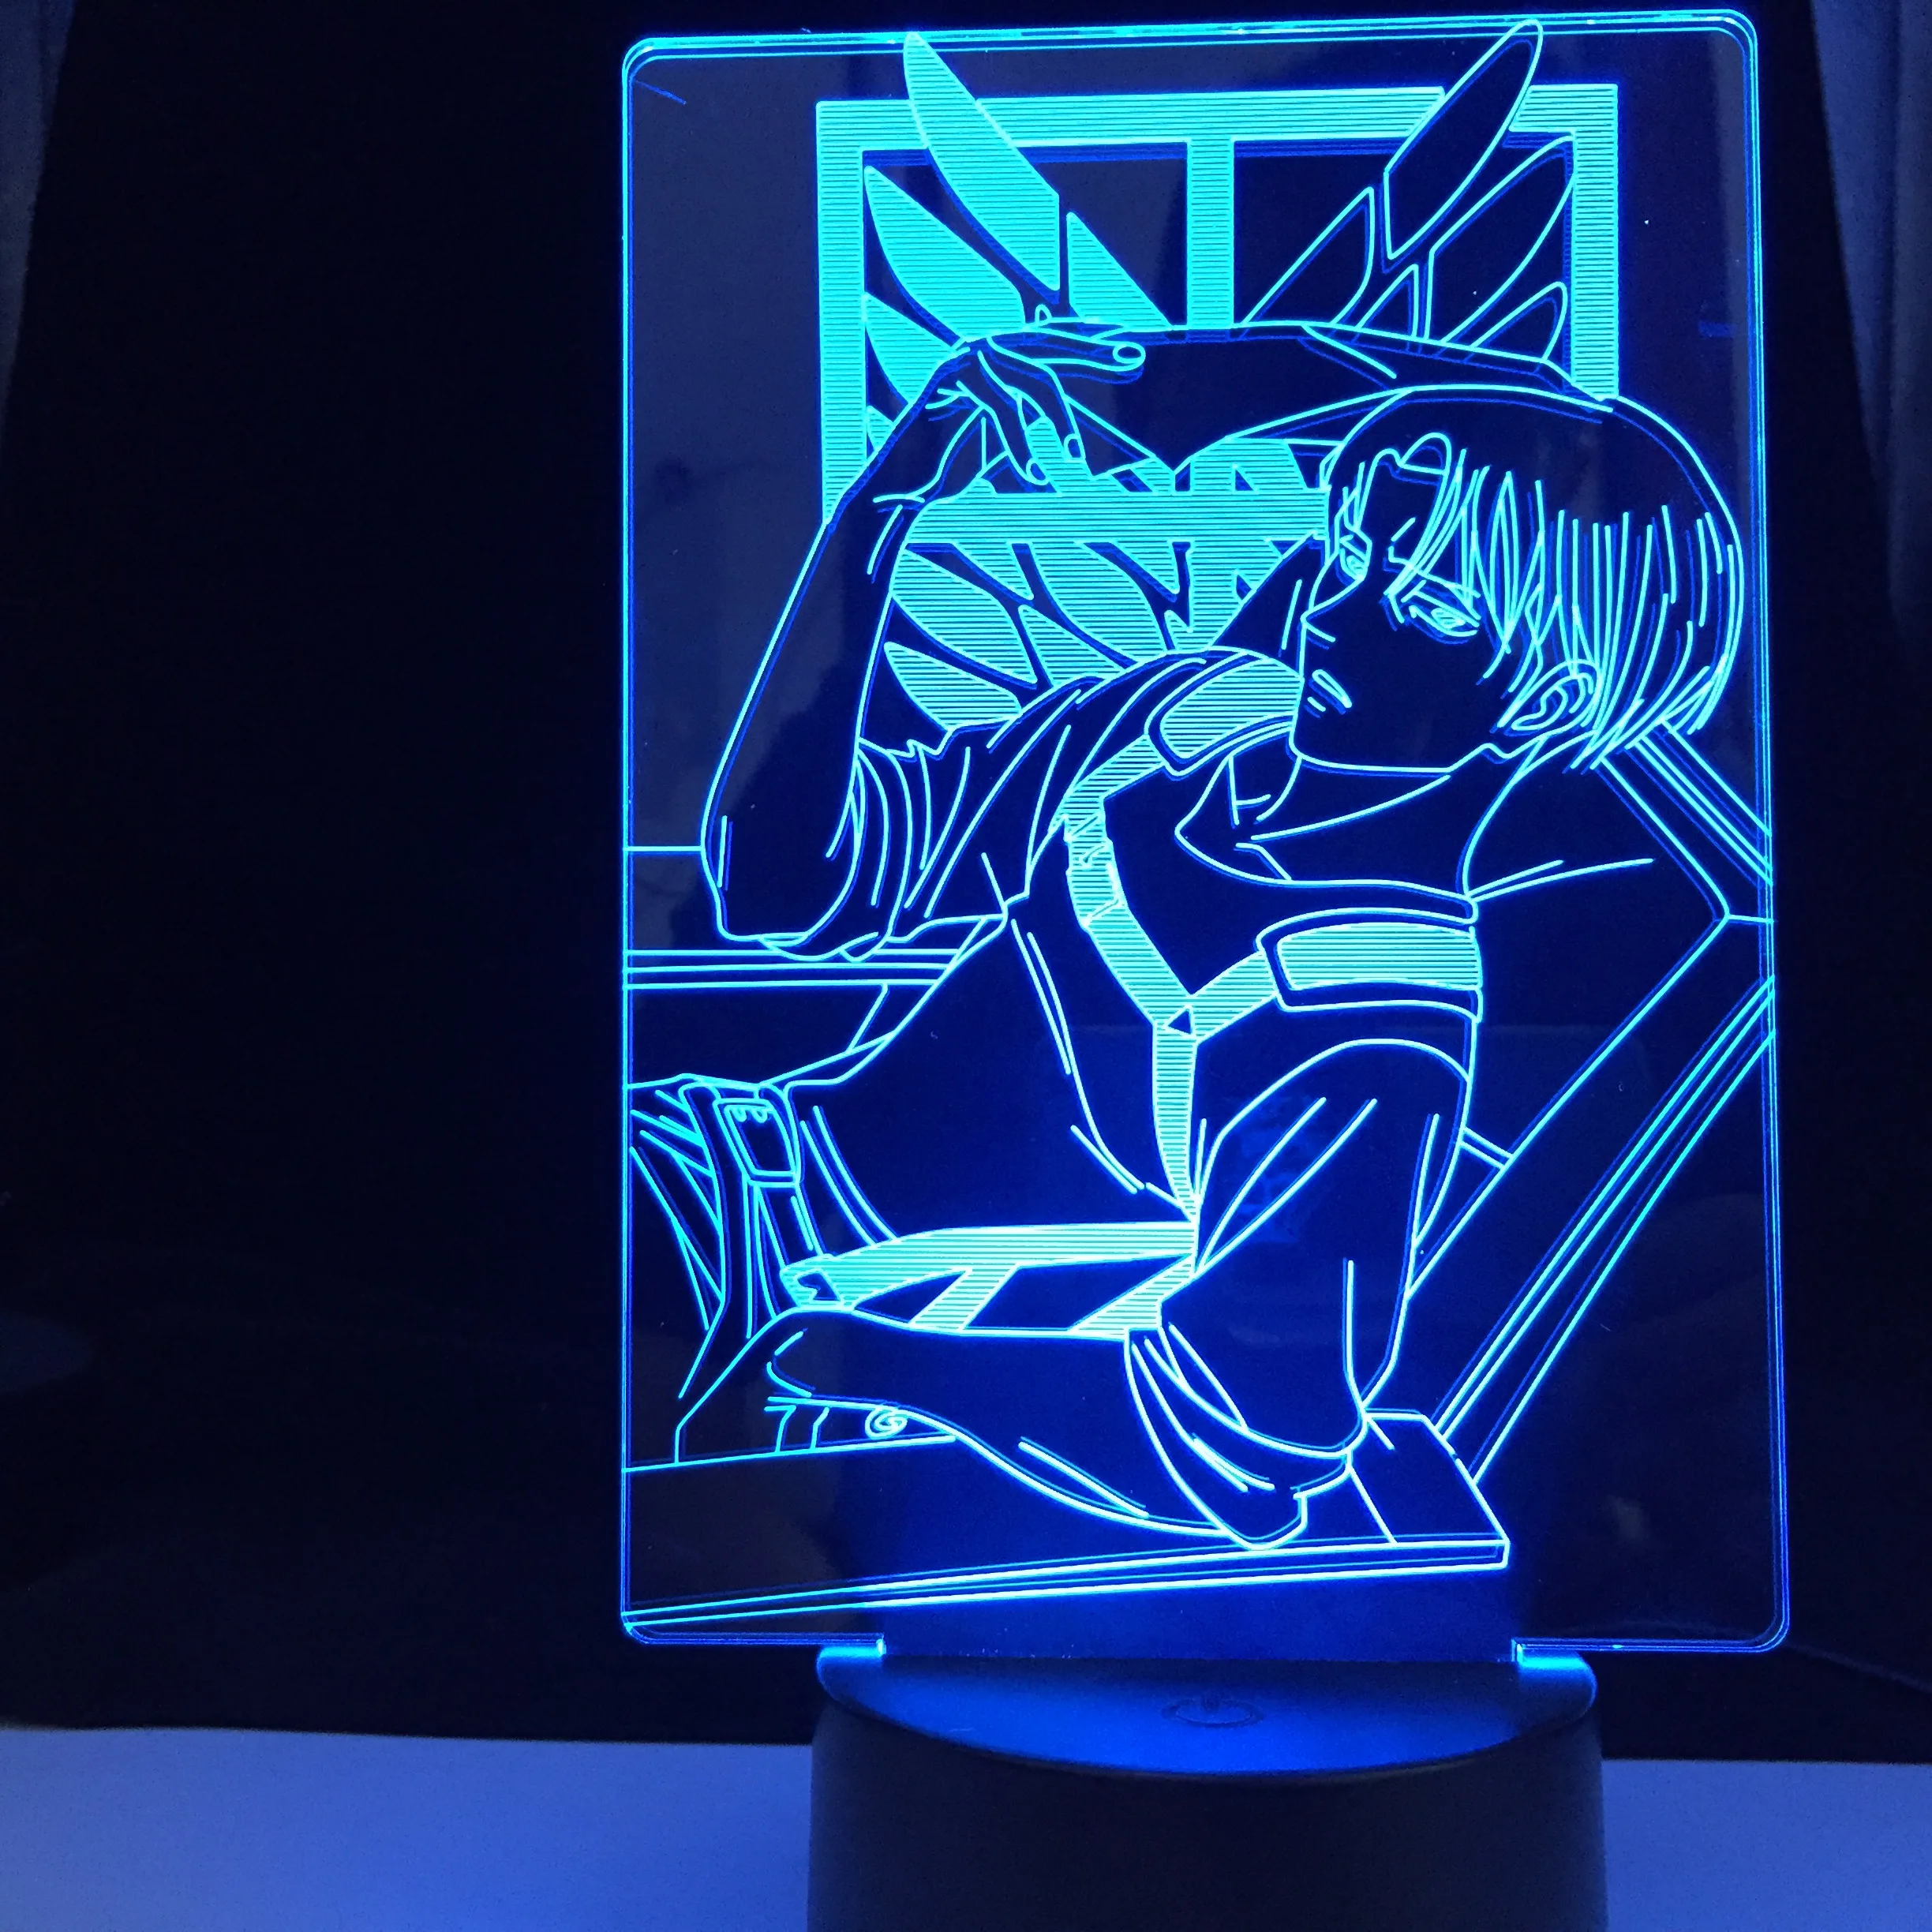 

Acrylic 3d Lamp Levi Ackerman Anime Attack on Titan for Home Room Decor Light Child Gift Captain Levi Ackerman LED Night Light